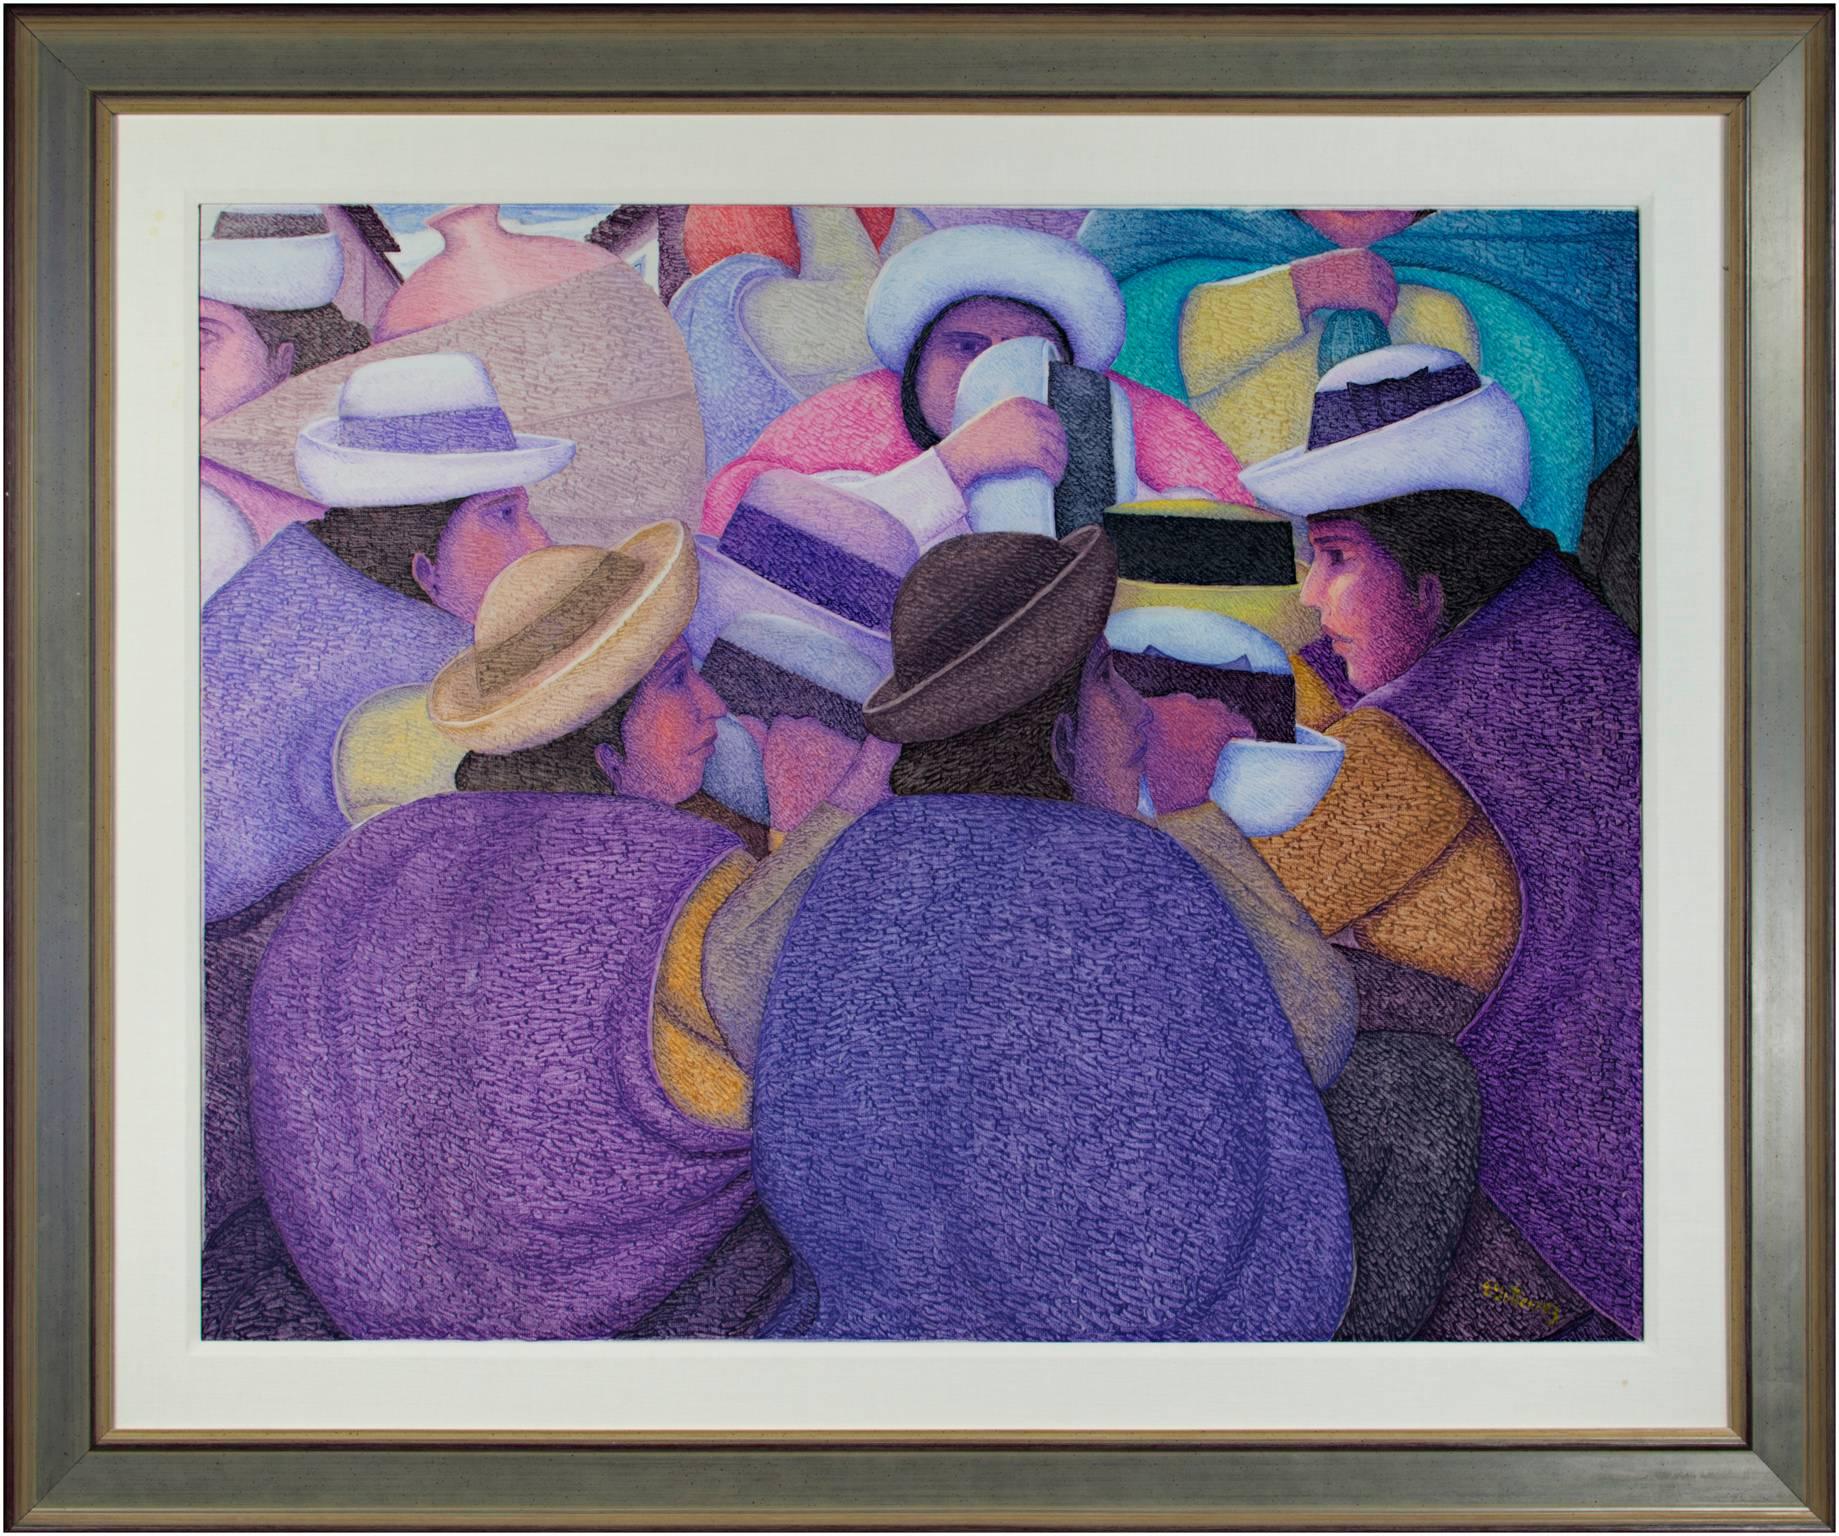 "Ferria De Sombreros (The Hat Market), " Oil on Jute by Ernesto Gutierrez